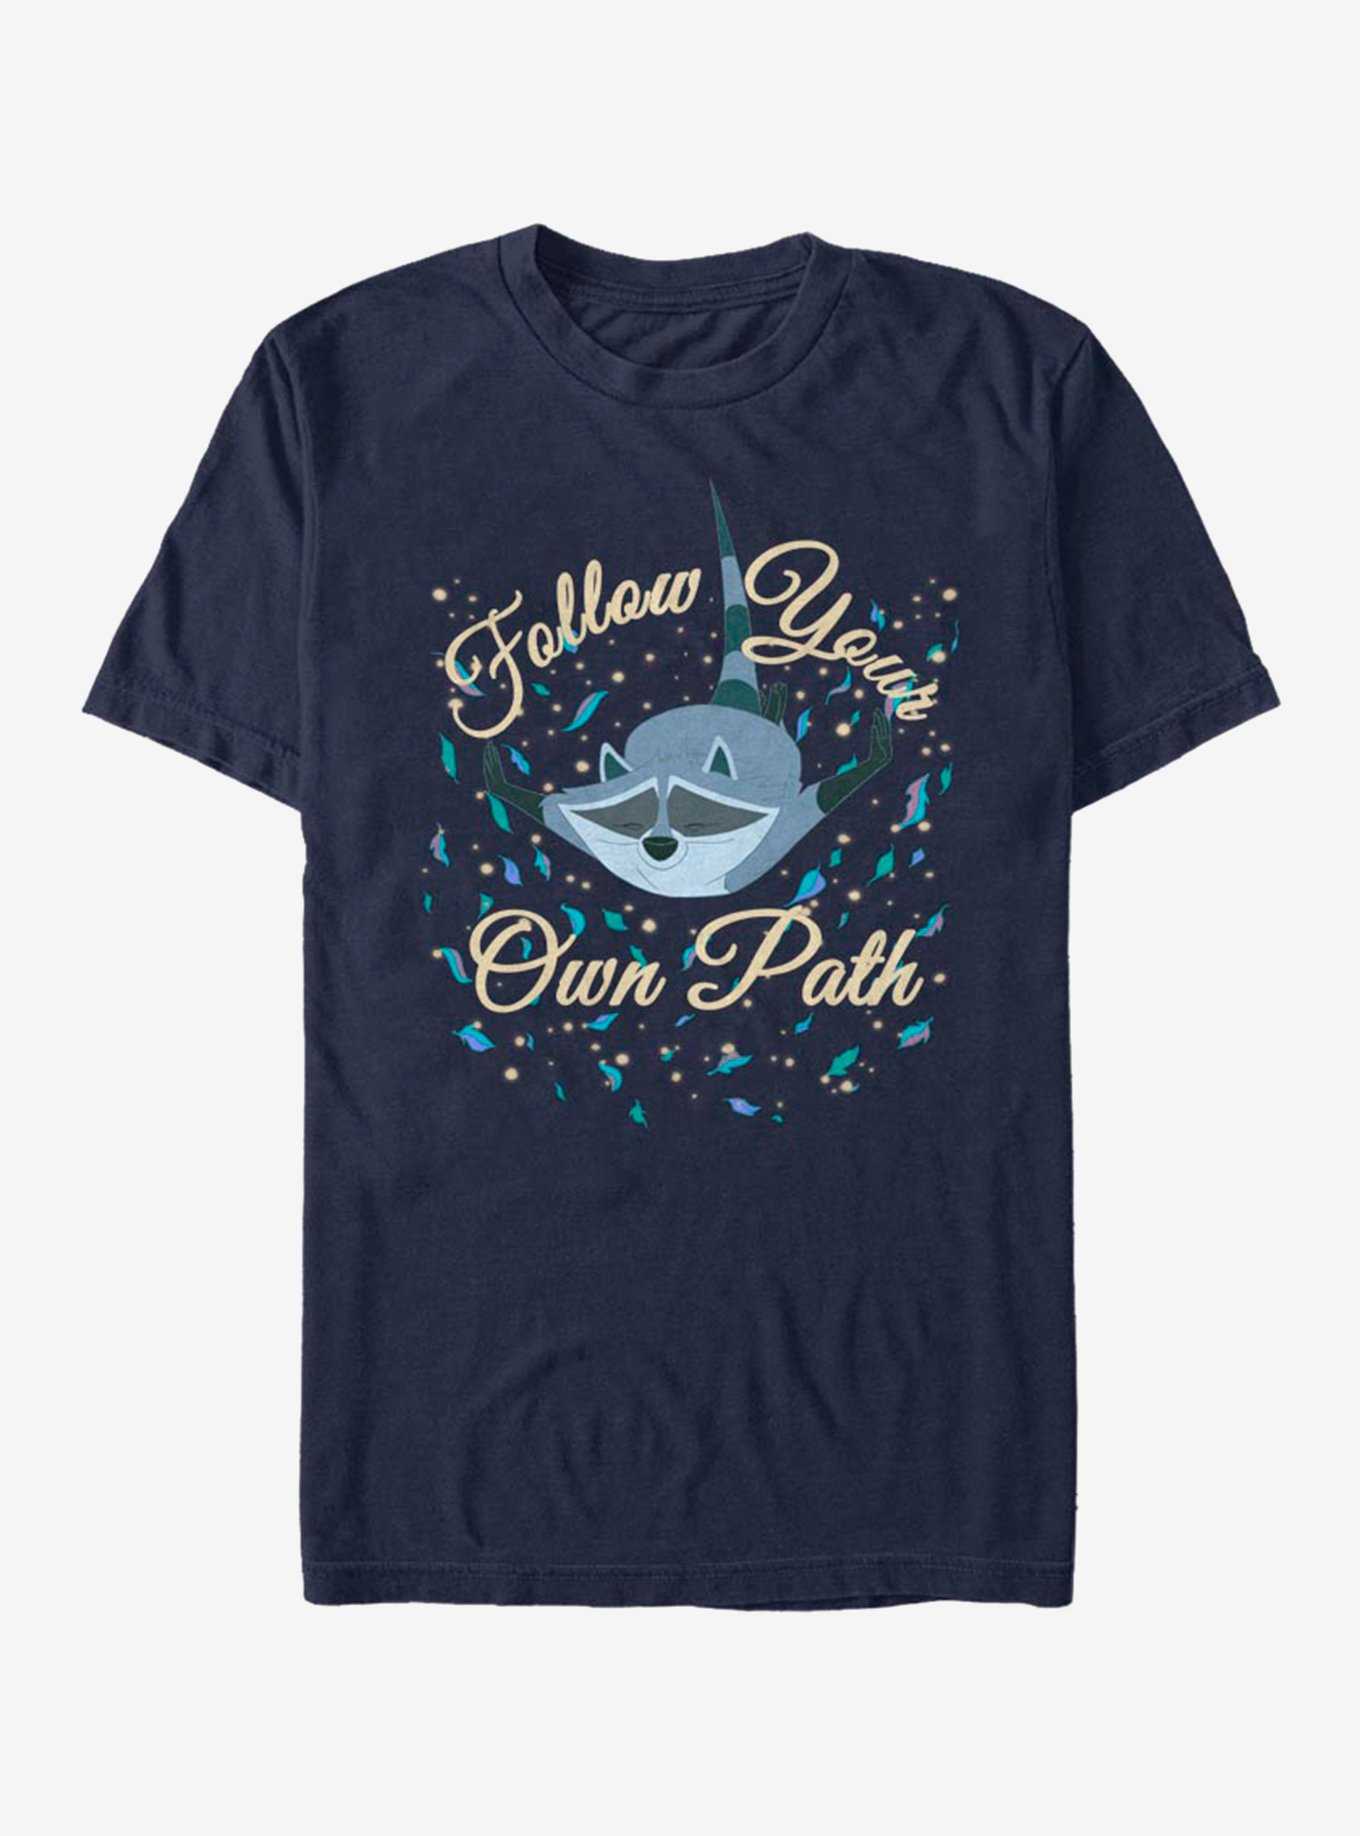 Disney Pocahontas Meeko Falling T-Shirt, , hi-res